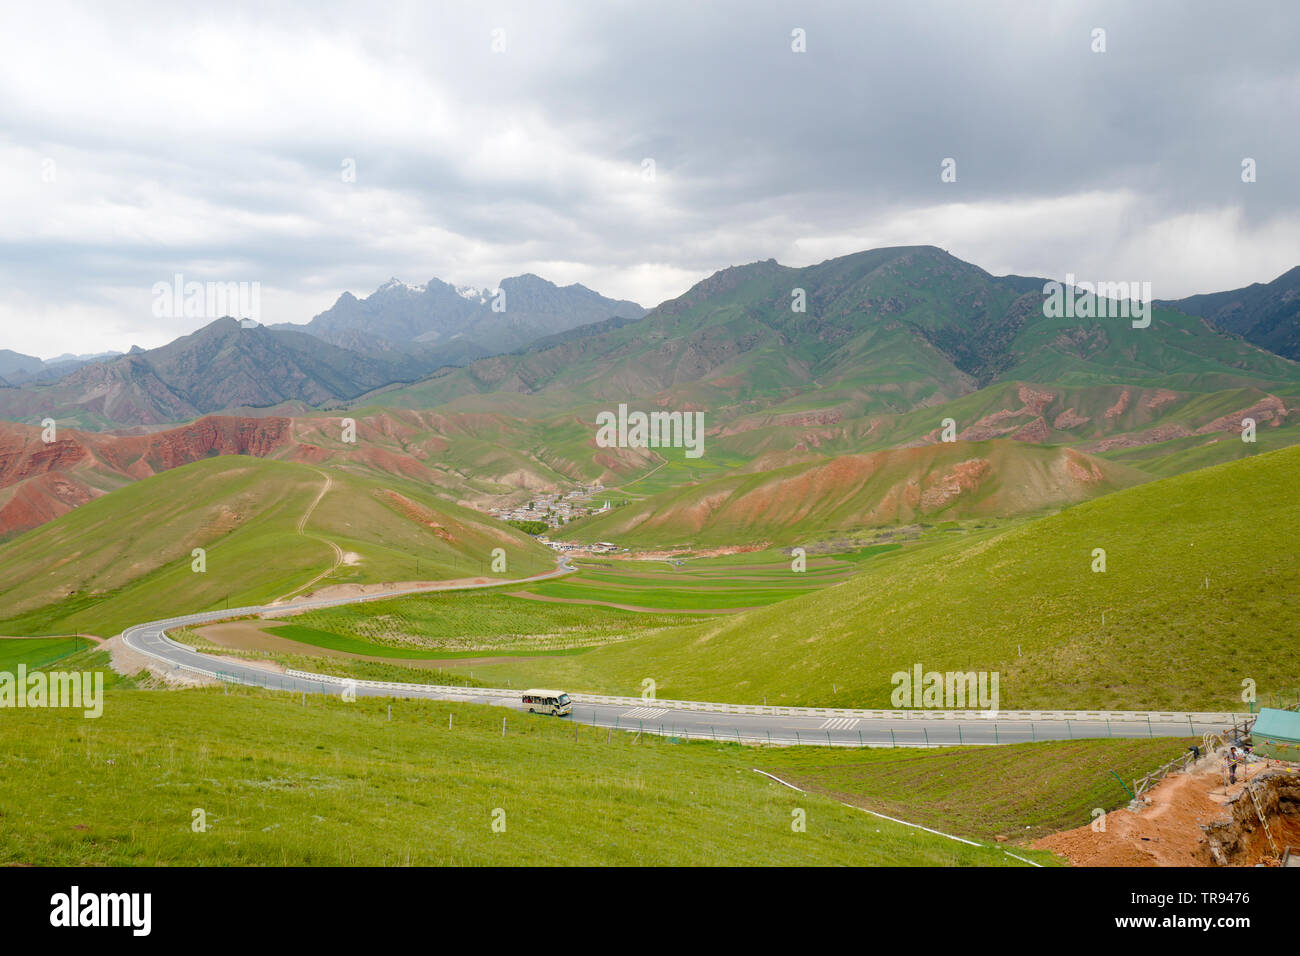 The view of Qilian Mountains. Stock Photo